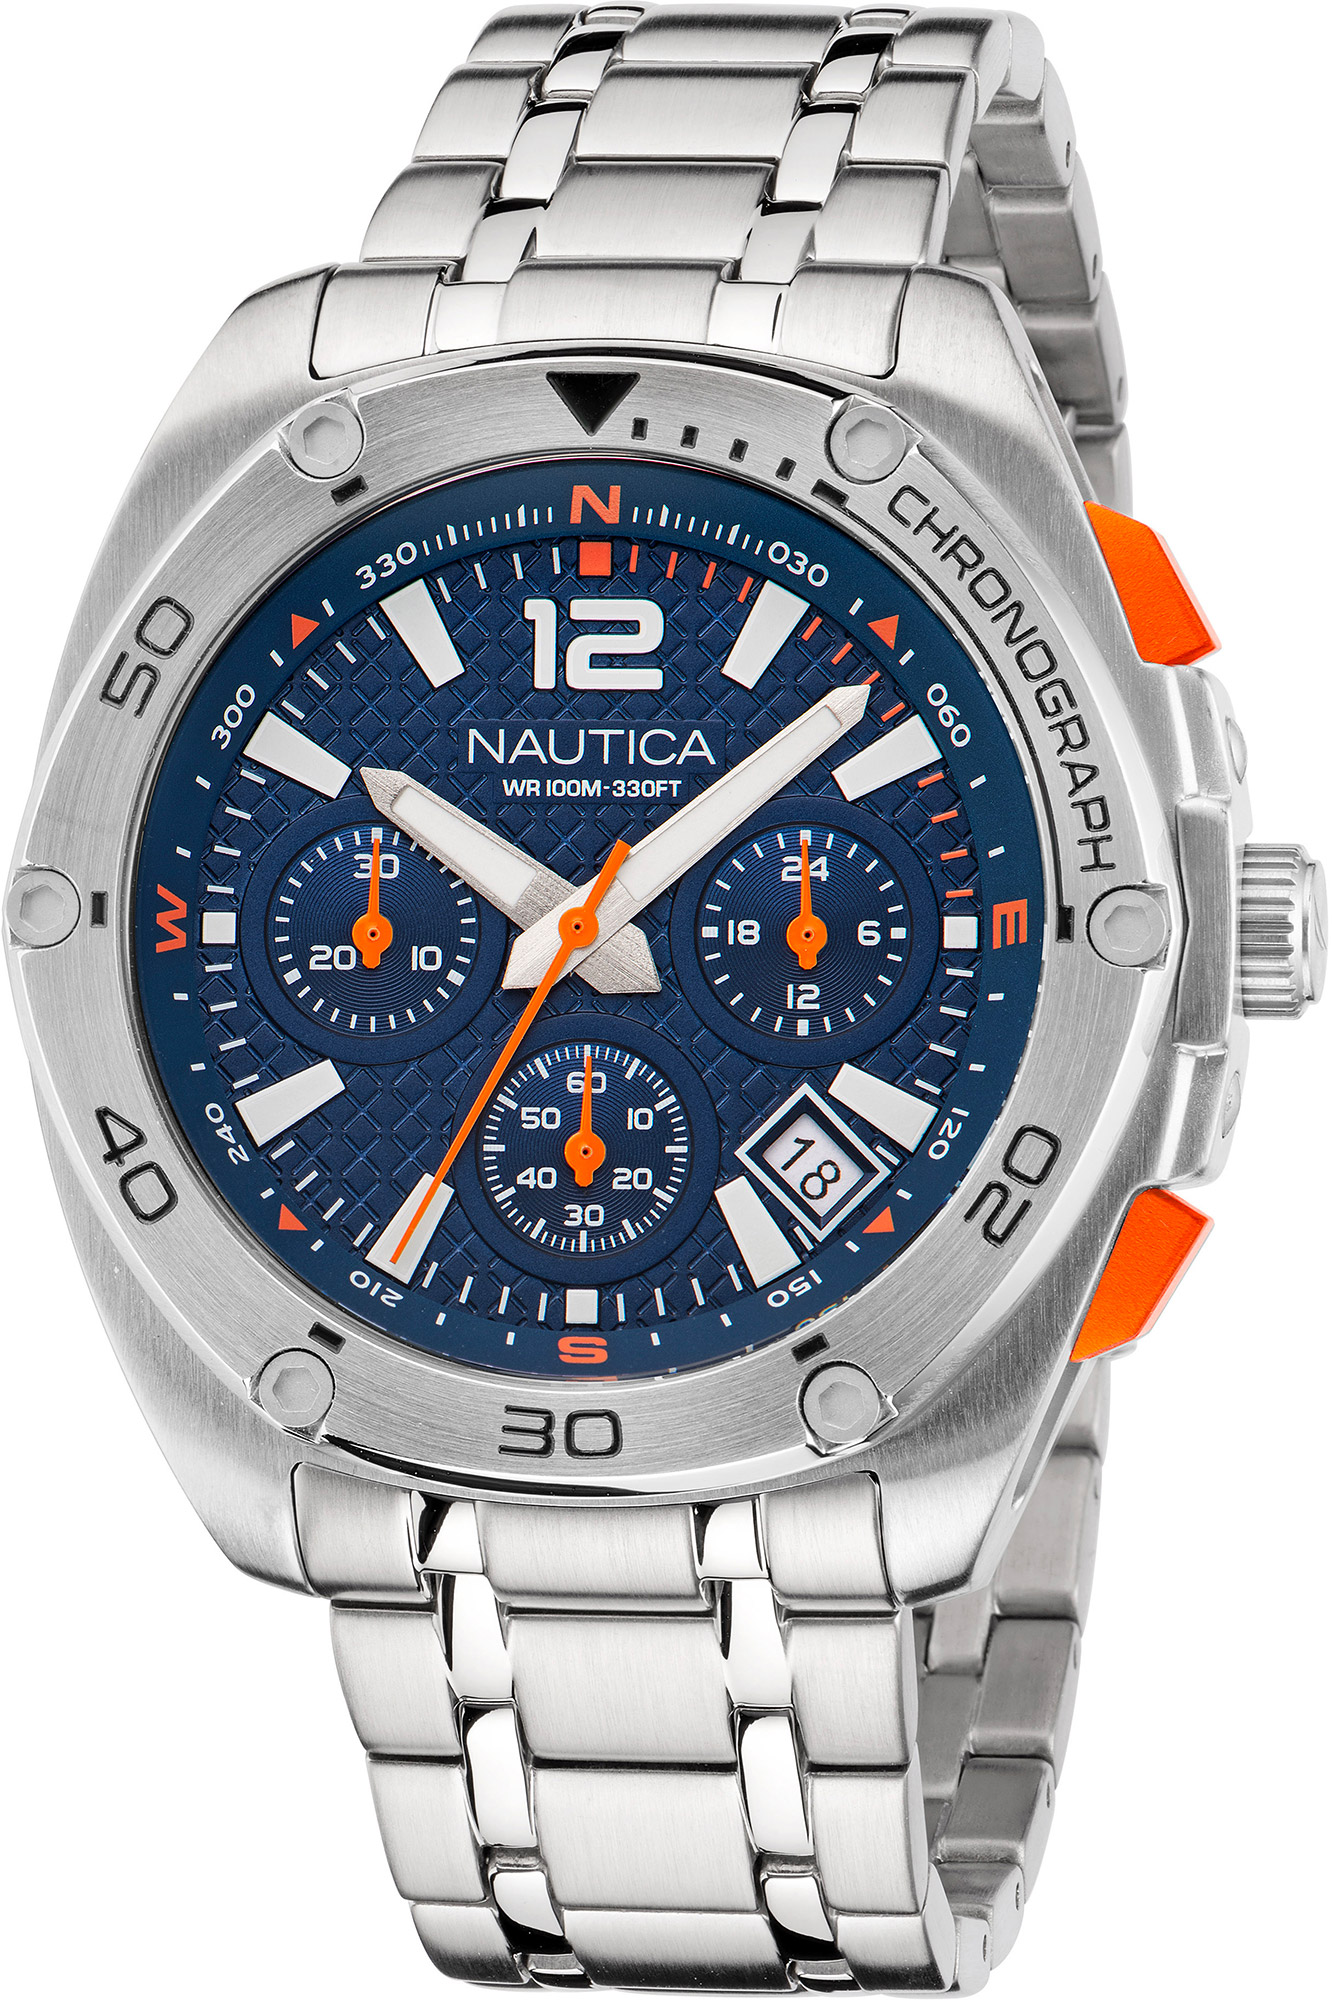 Uhr Nautica naptcf212